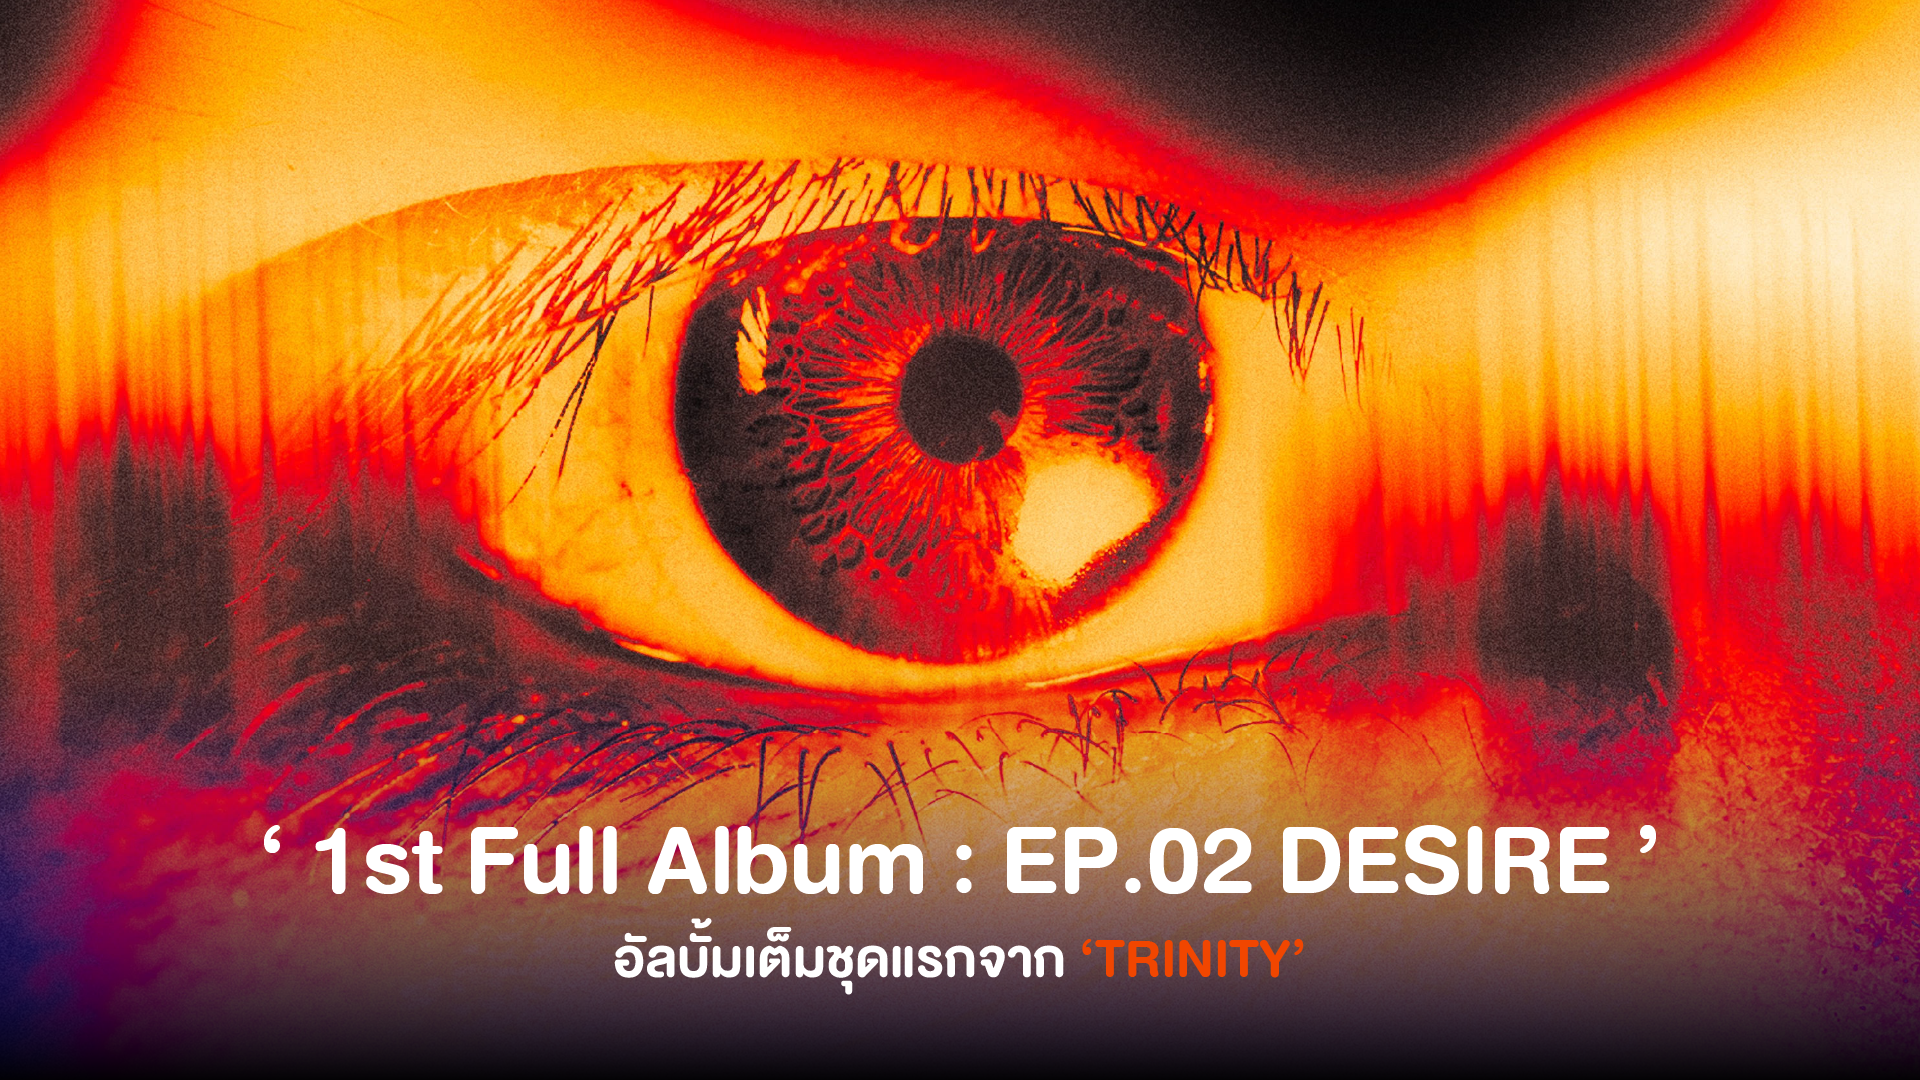 ‘TRINITY’ กลับมาให้หายคิดถึงใน ‘EP.02 DESIRE’ พร้อม 3 เพลง 3 สไตล์ ฮอตติดชาร์ตทันทีที่ปล่อยผลงาน!